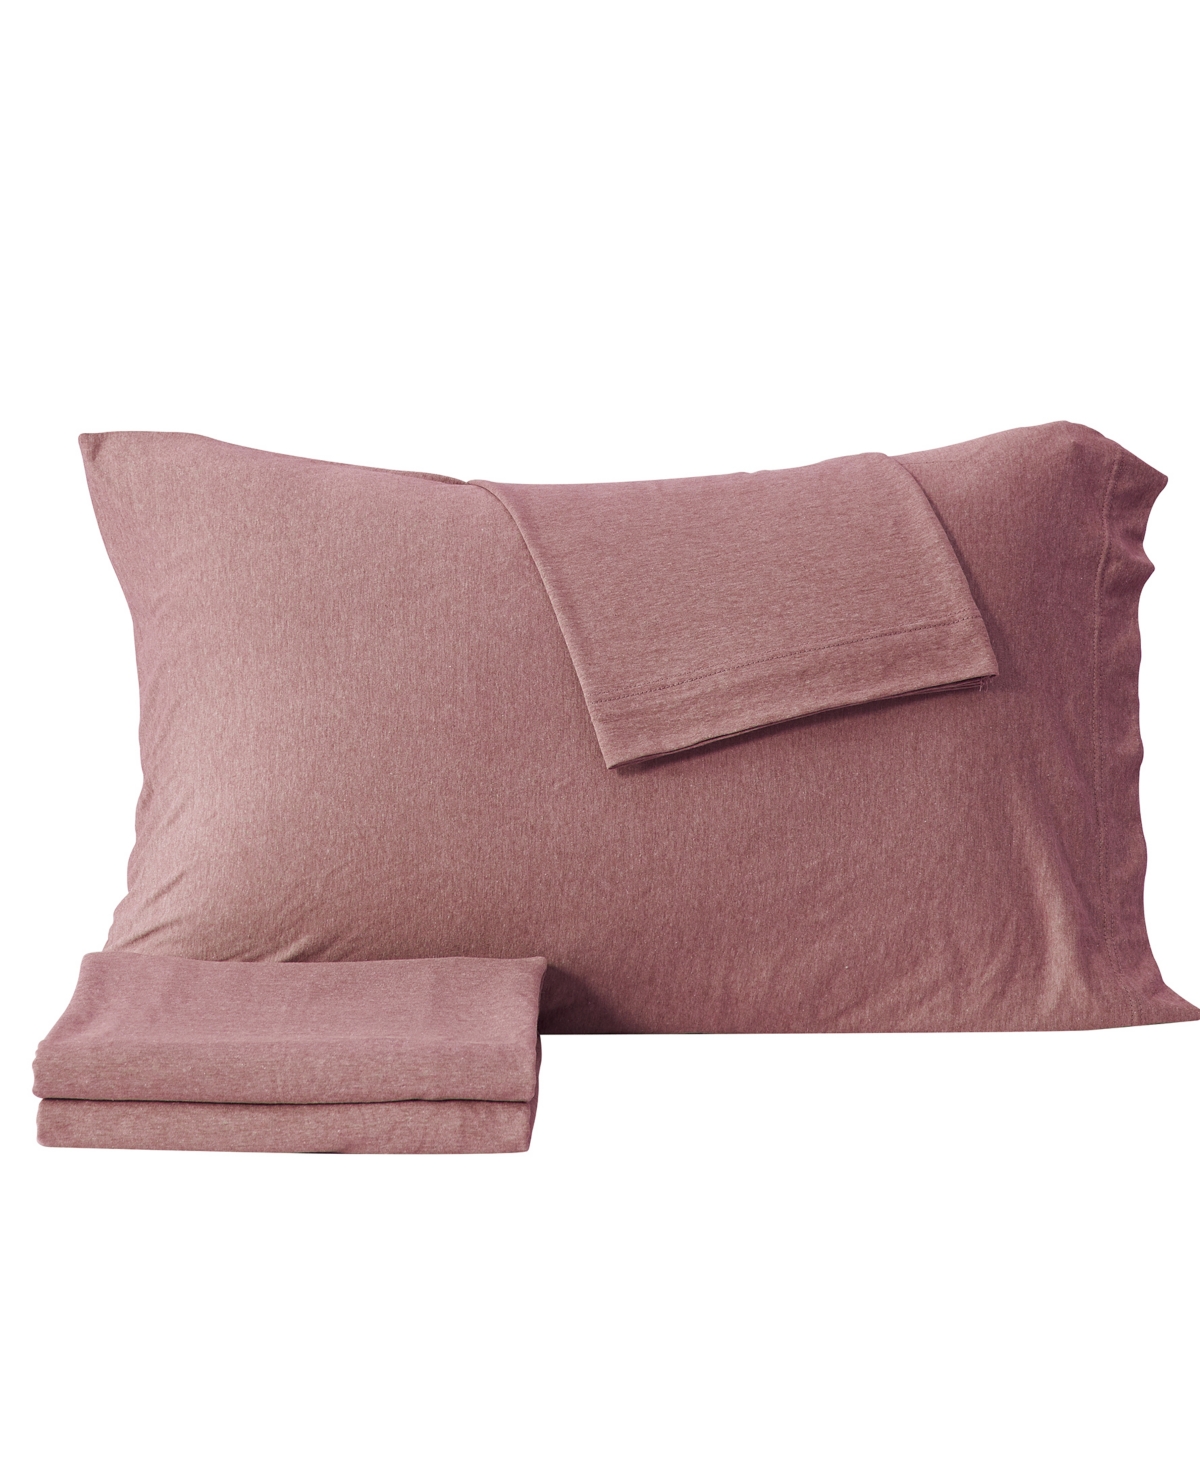 Premium Comforts Heathered Melange T-shirt Jersey Knit Cotton Blend 4 Piece Sheet Set, Queen In Heathered Dusty Rose